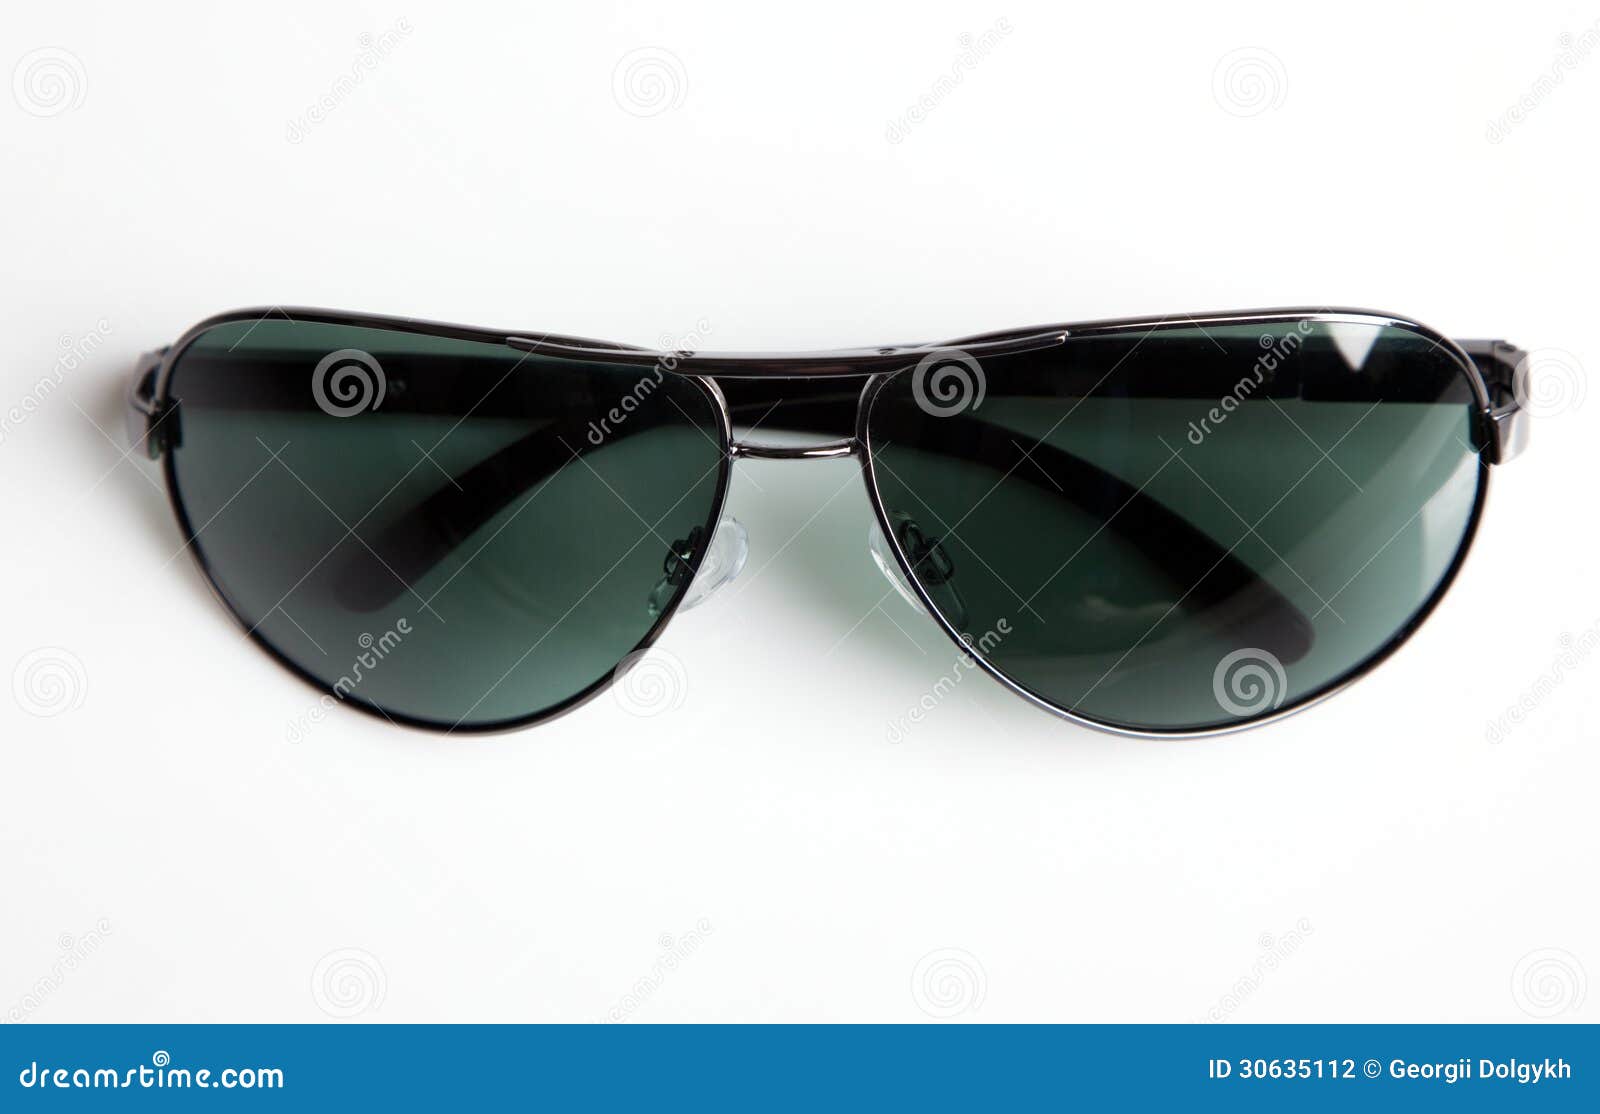 Sunglasses close-up photo stock photo. Image of glasses - 30635112